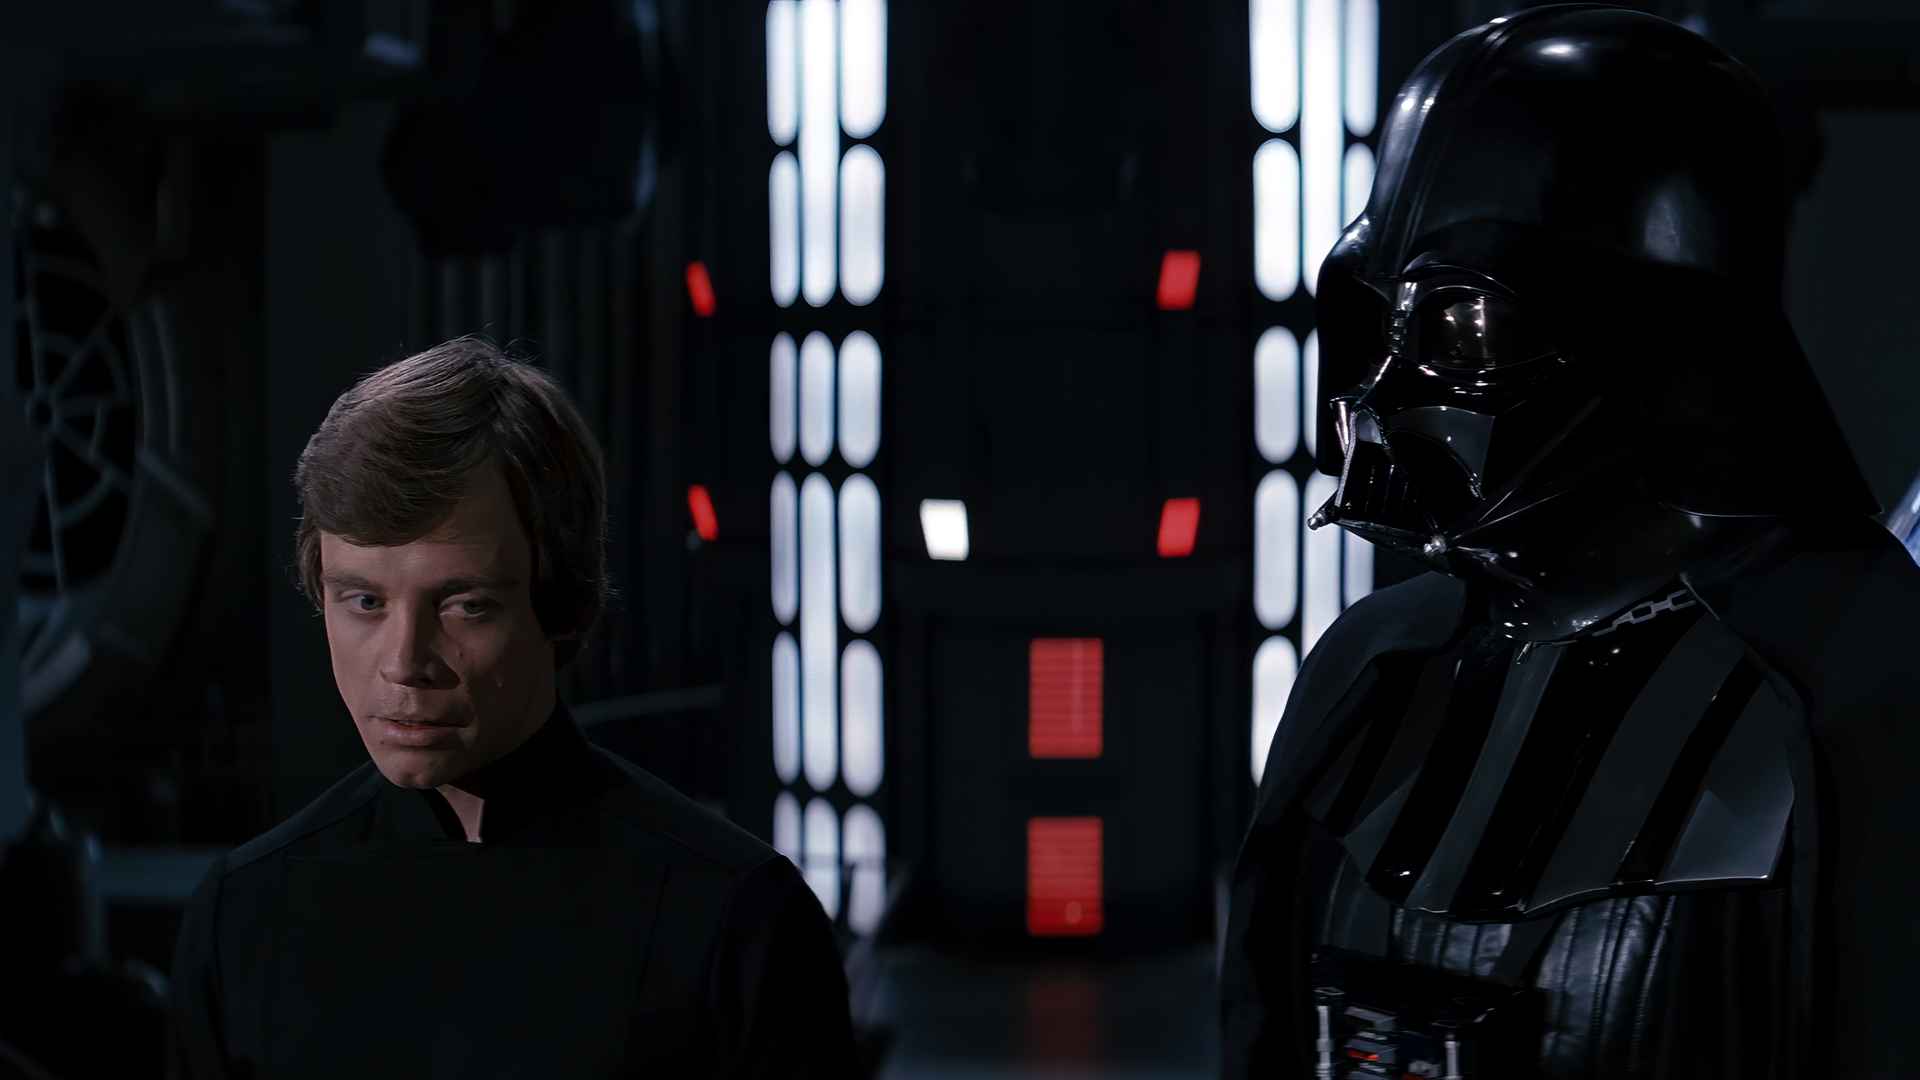 People 1920x1080 Star Wars: Episode VI - The Return of the Jedi movies film stills Star Wars Darth Vader Luke Skywalker Jedi Sith Mark Hamill actor helmet Death Star